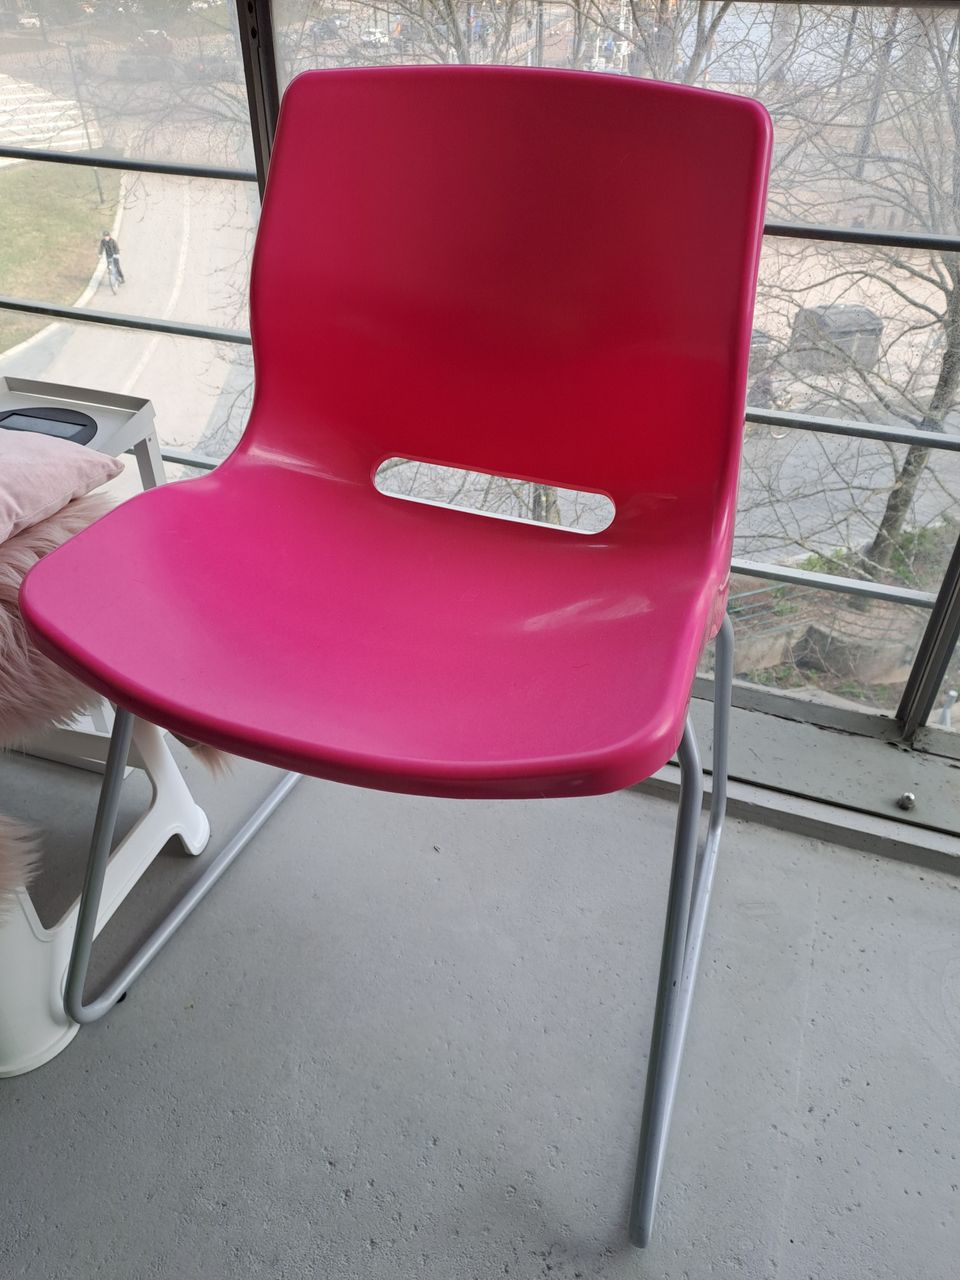 Pinkki tuoli